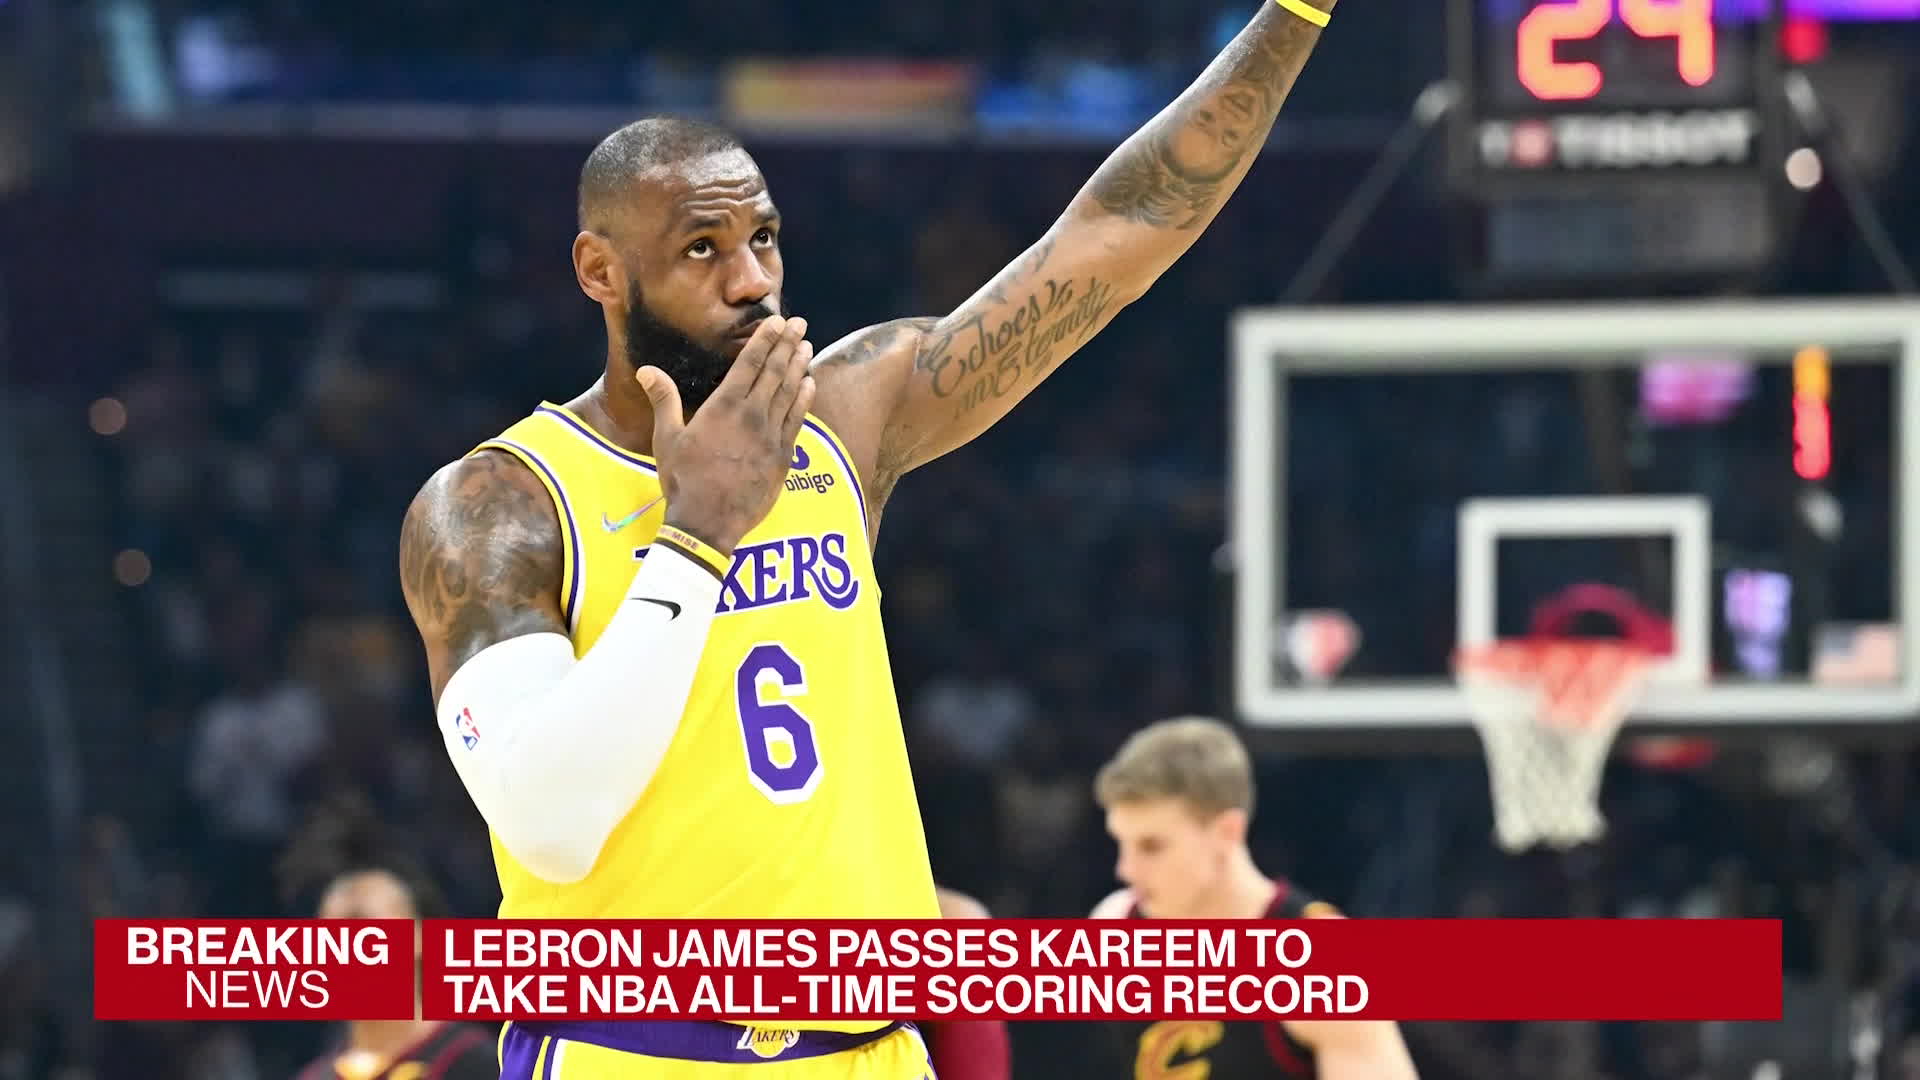 LeBron James becomes NBA's all-time points record holder as he surpasses  Kareem Abdul-Jabbar's record, NBA News